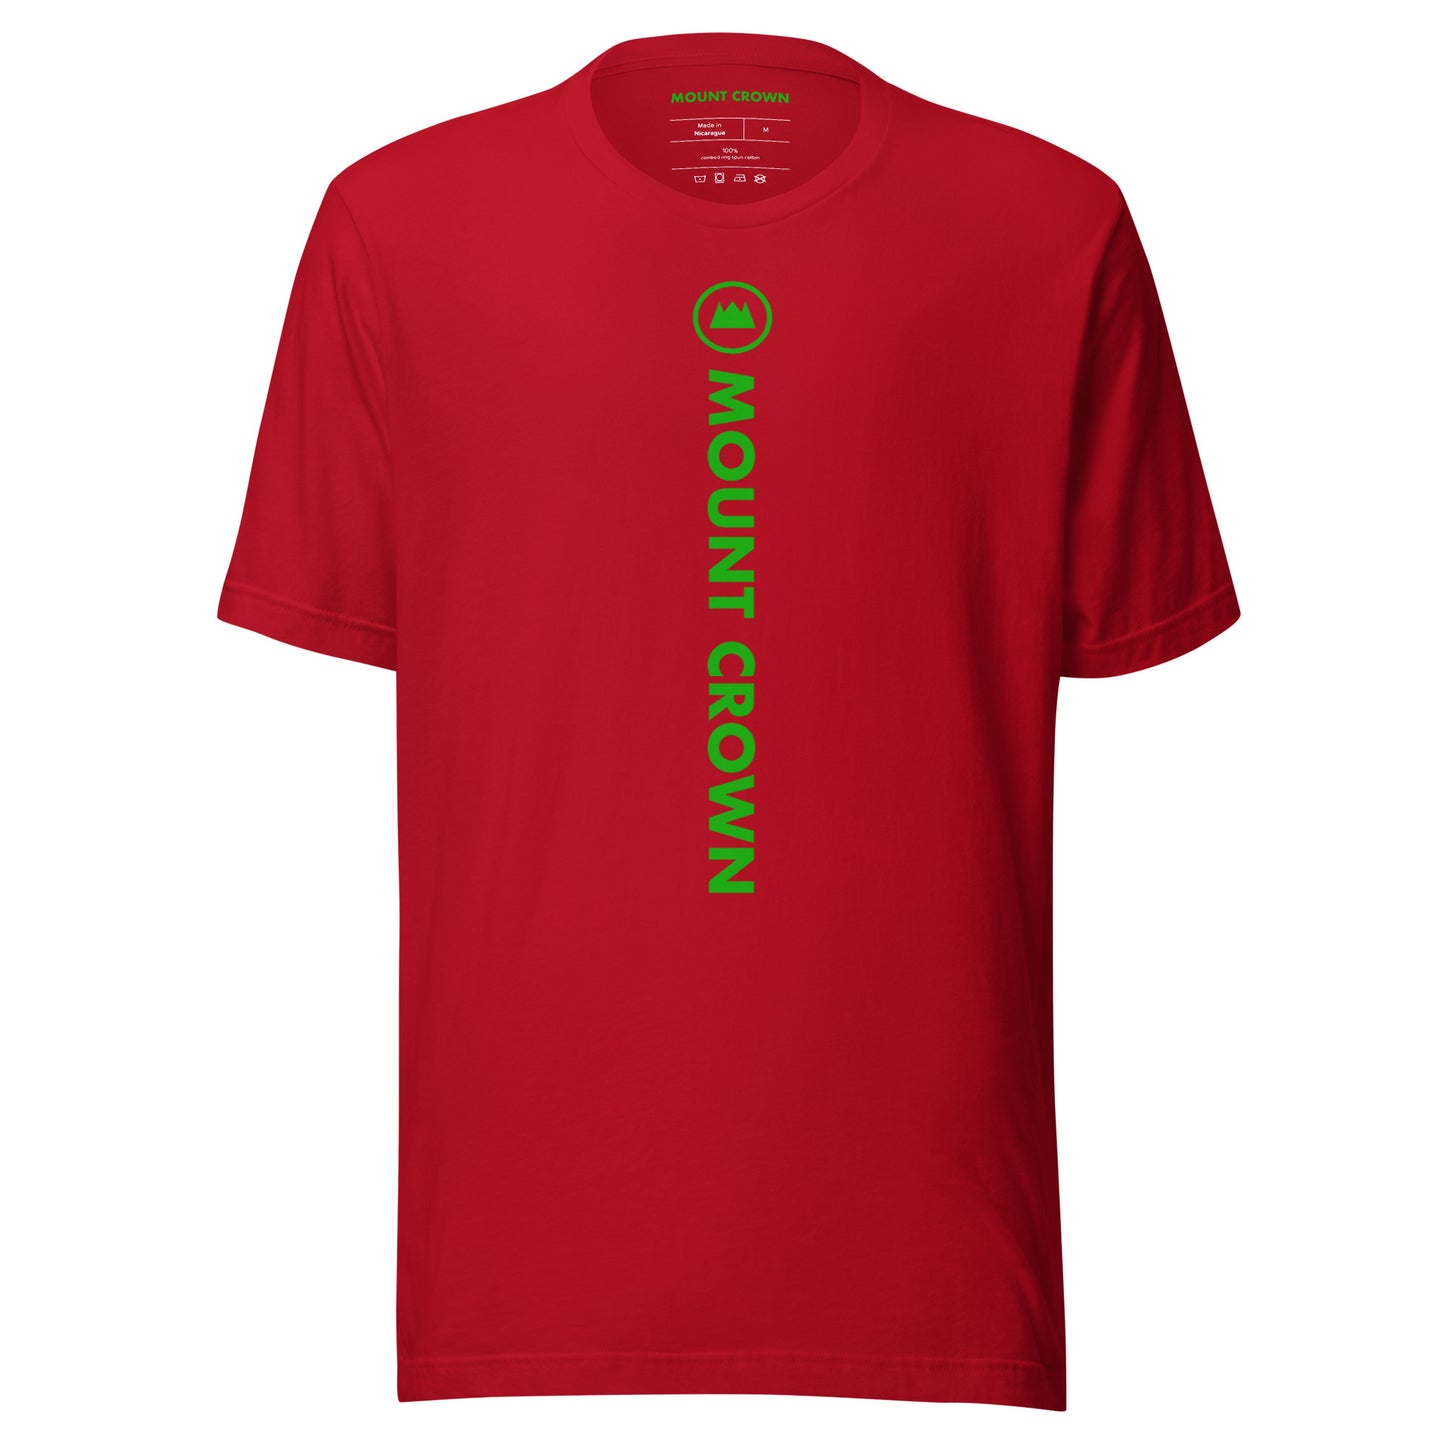 MOUNT CROWN (Gr)2 T-shirt